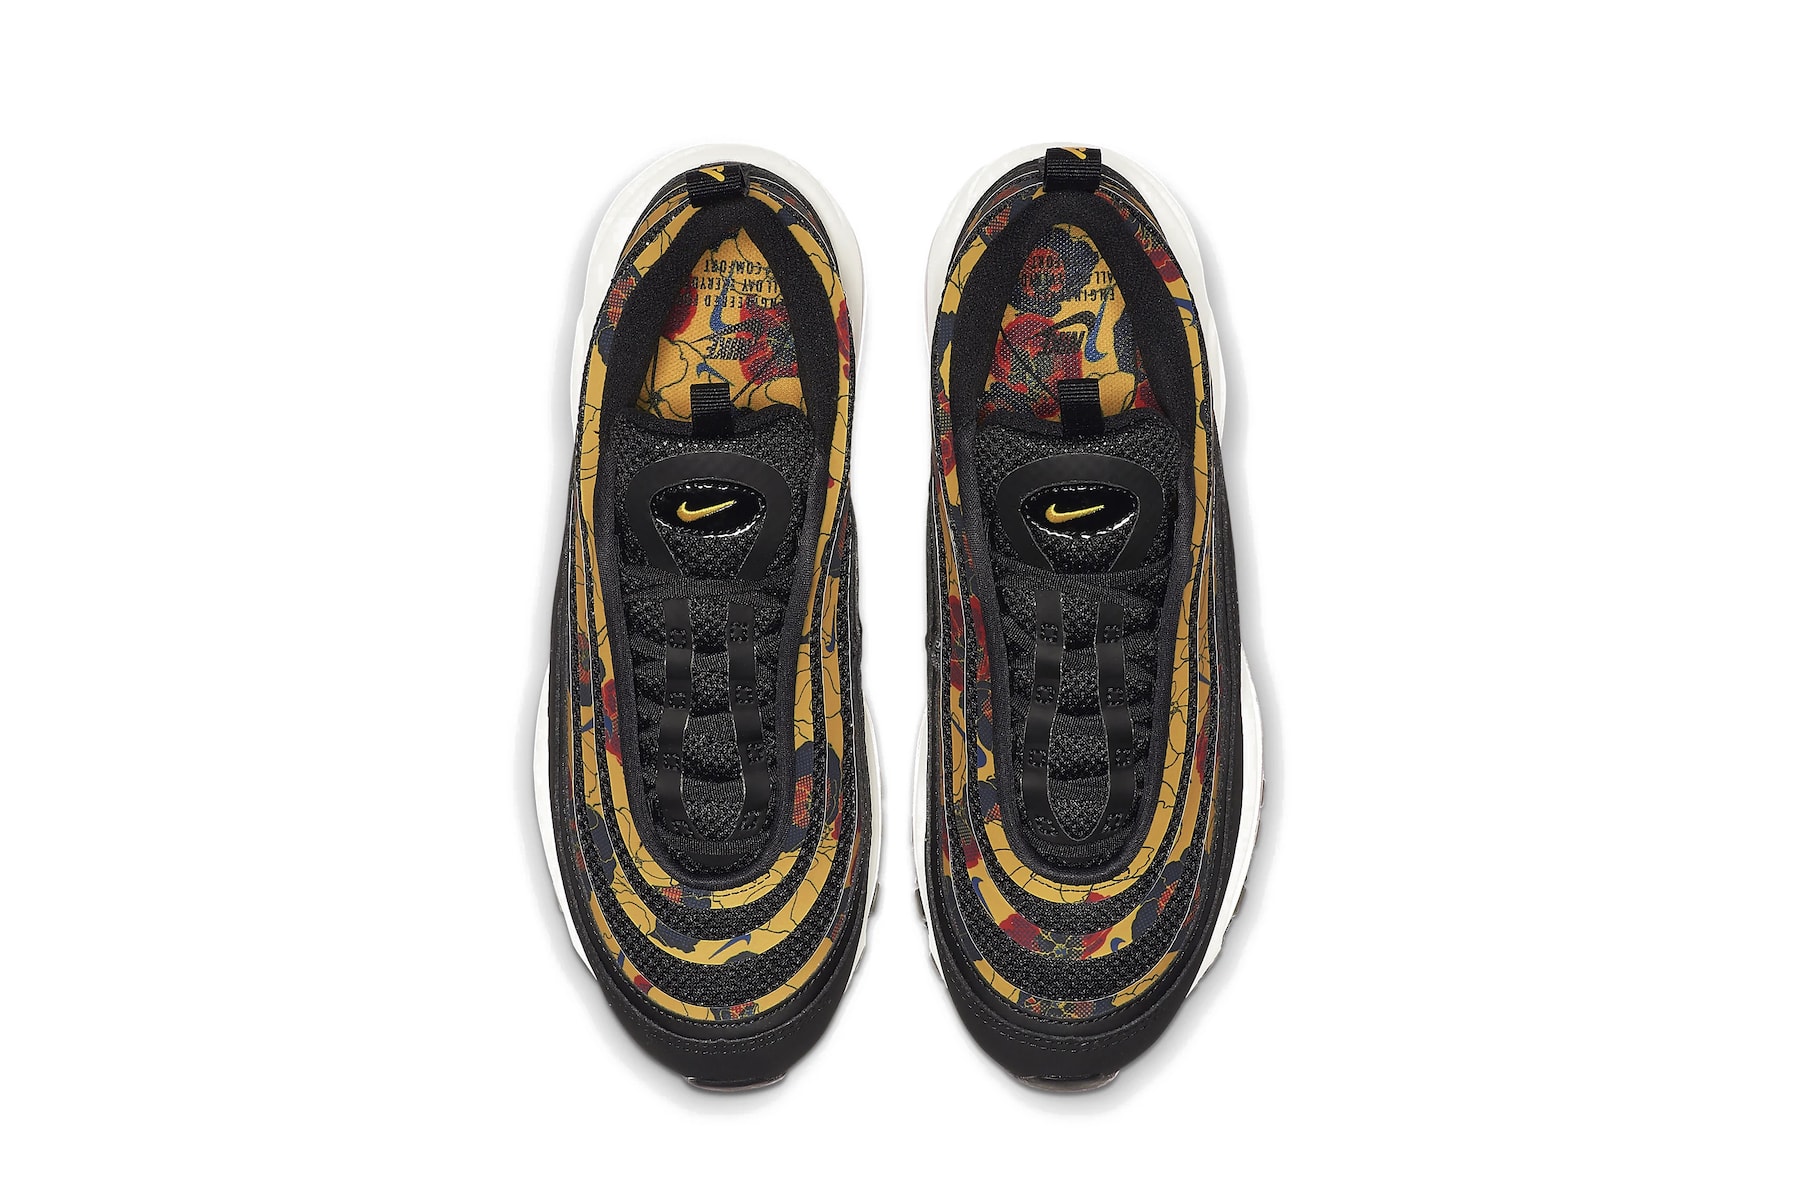 Nike Air Max 97 University Gold Floral Print White Black Summer Sneaker Shoe Release